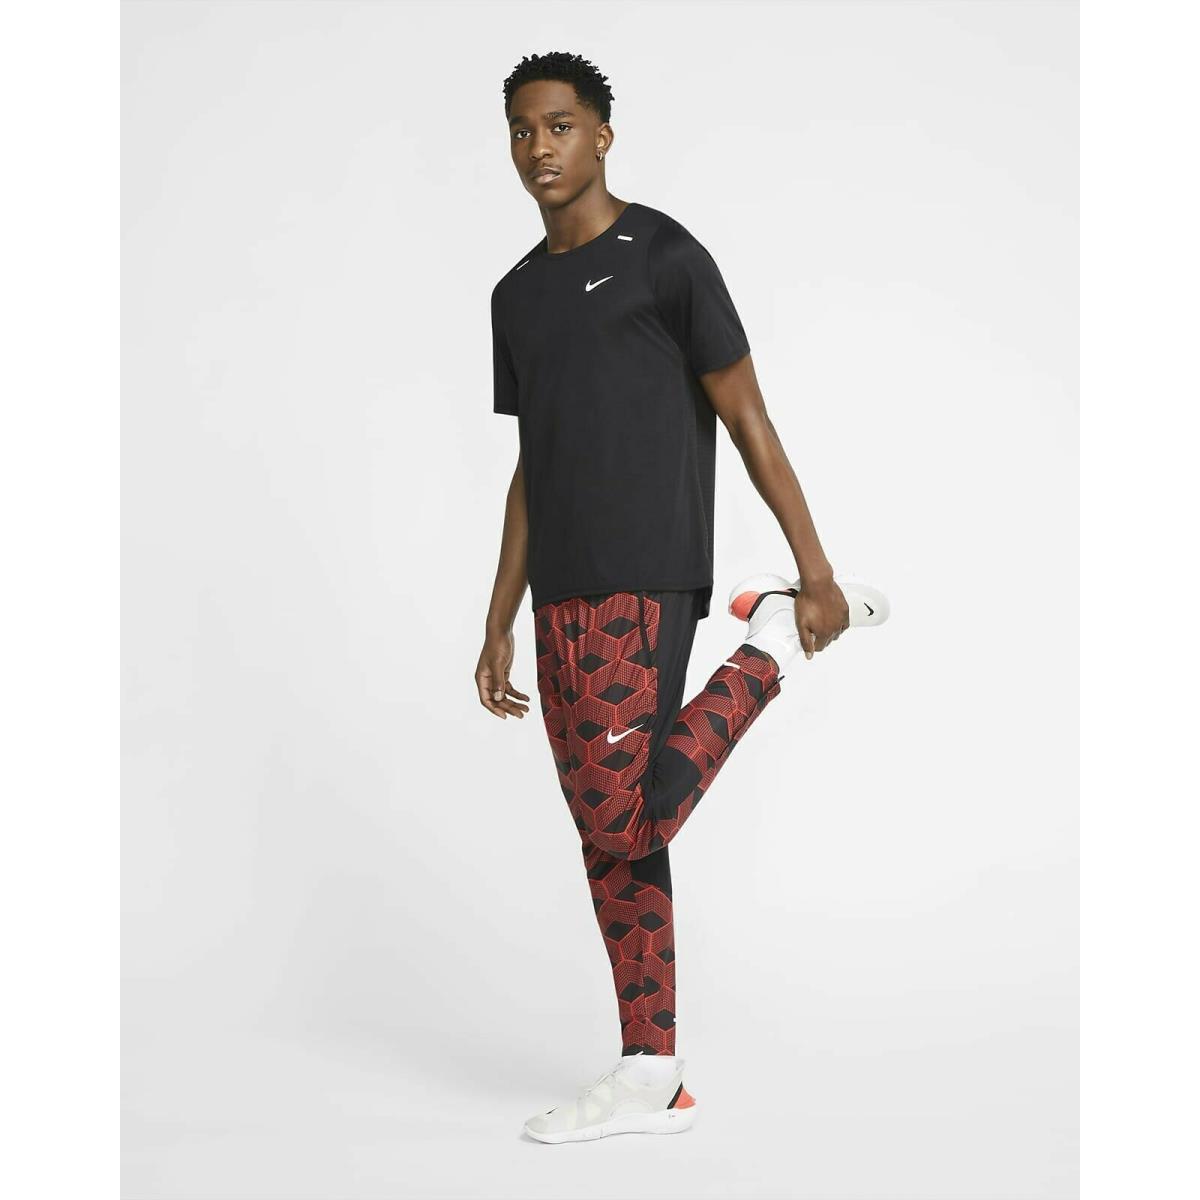 Nike clothing Pro Running - Red 3